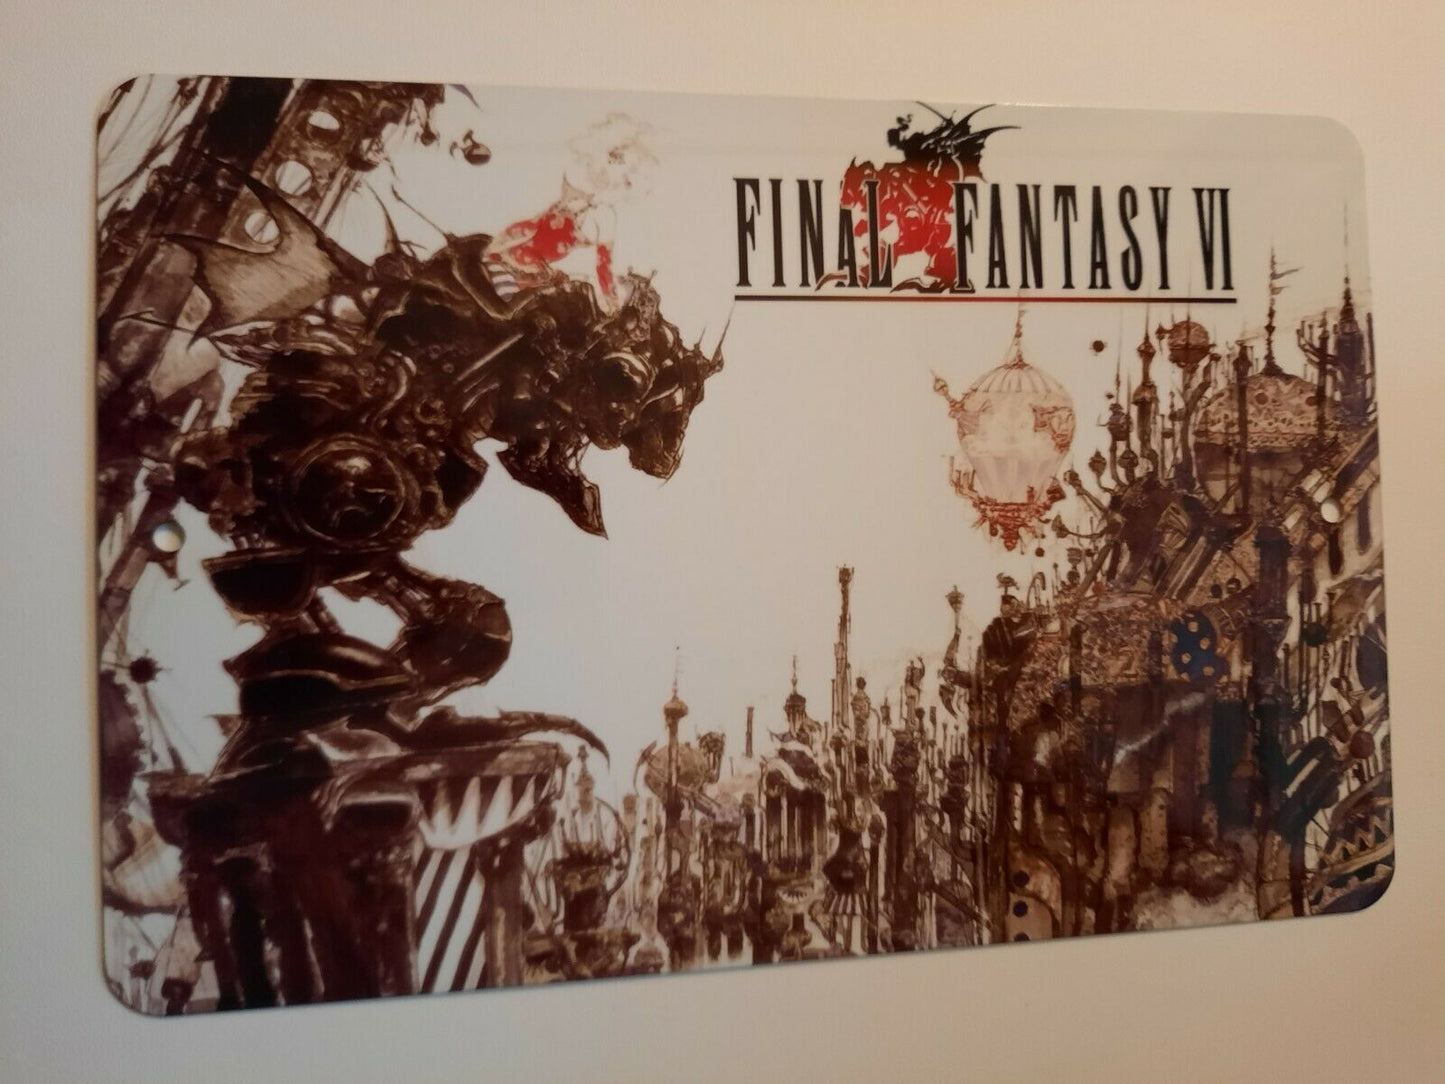 FFVI Final Fantasy 6 Video Game 8x12 Metal Wall Sign Arcade